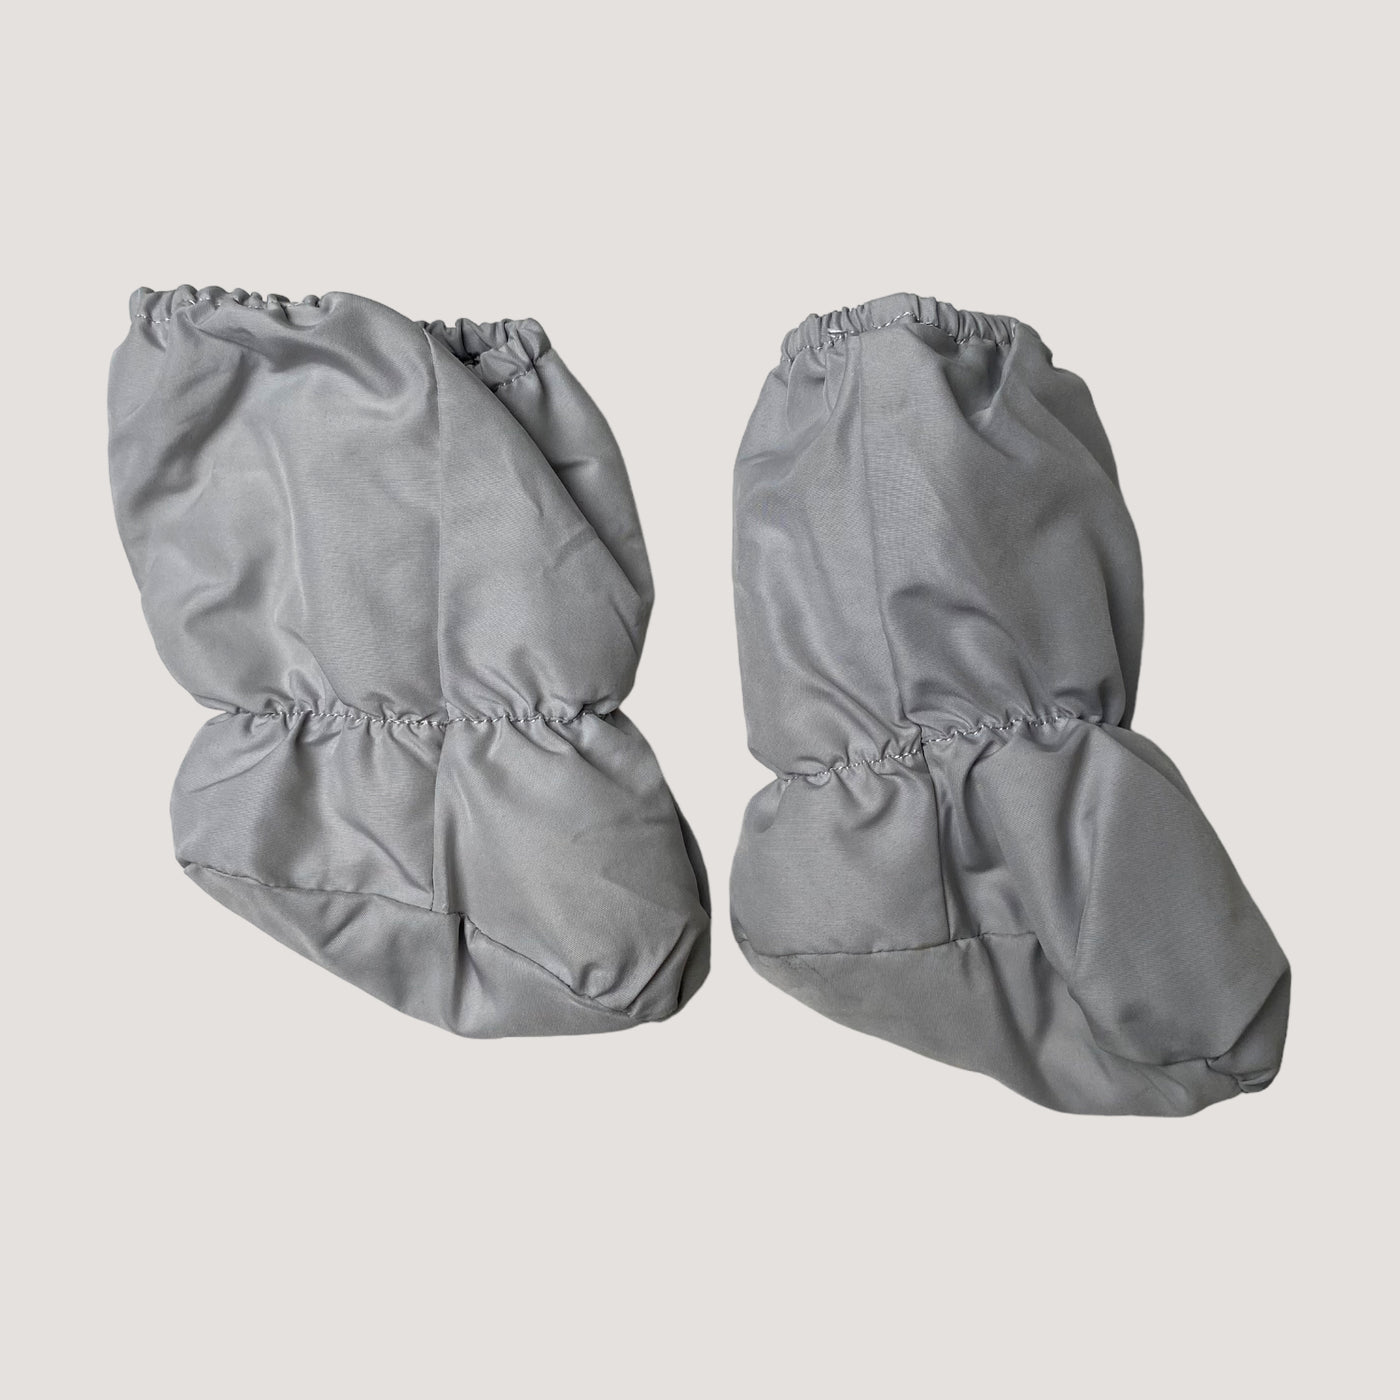 Reima baby winter boots, grey | 19-21